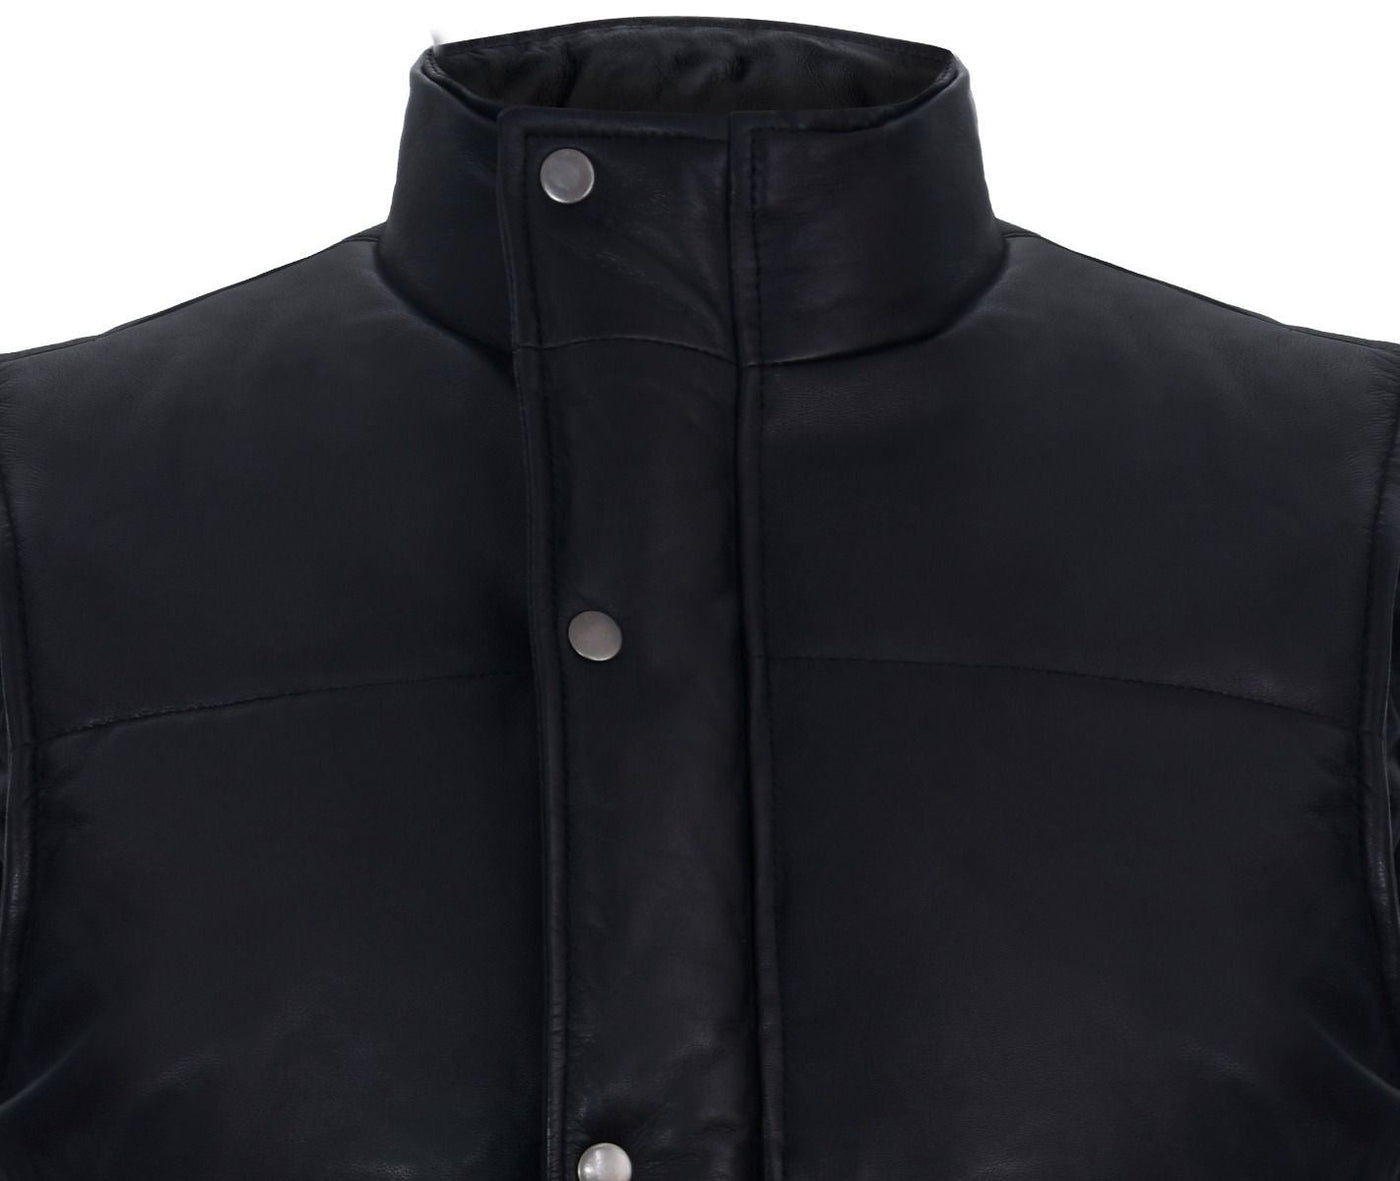 Mens Puffer Warmer Waistcoat Sleeveless Padded Leather Jacket